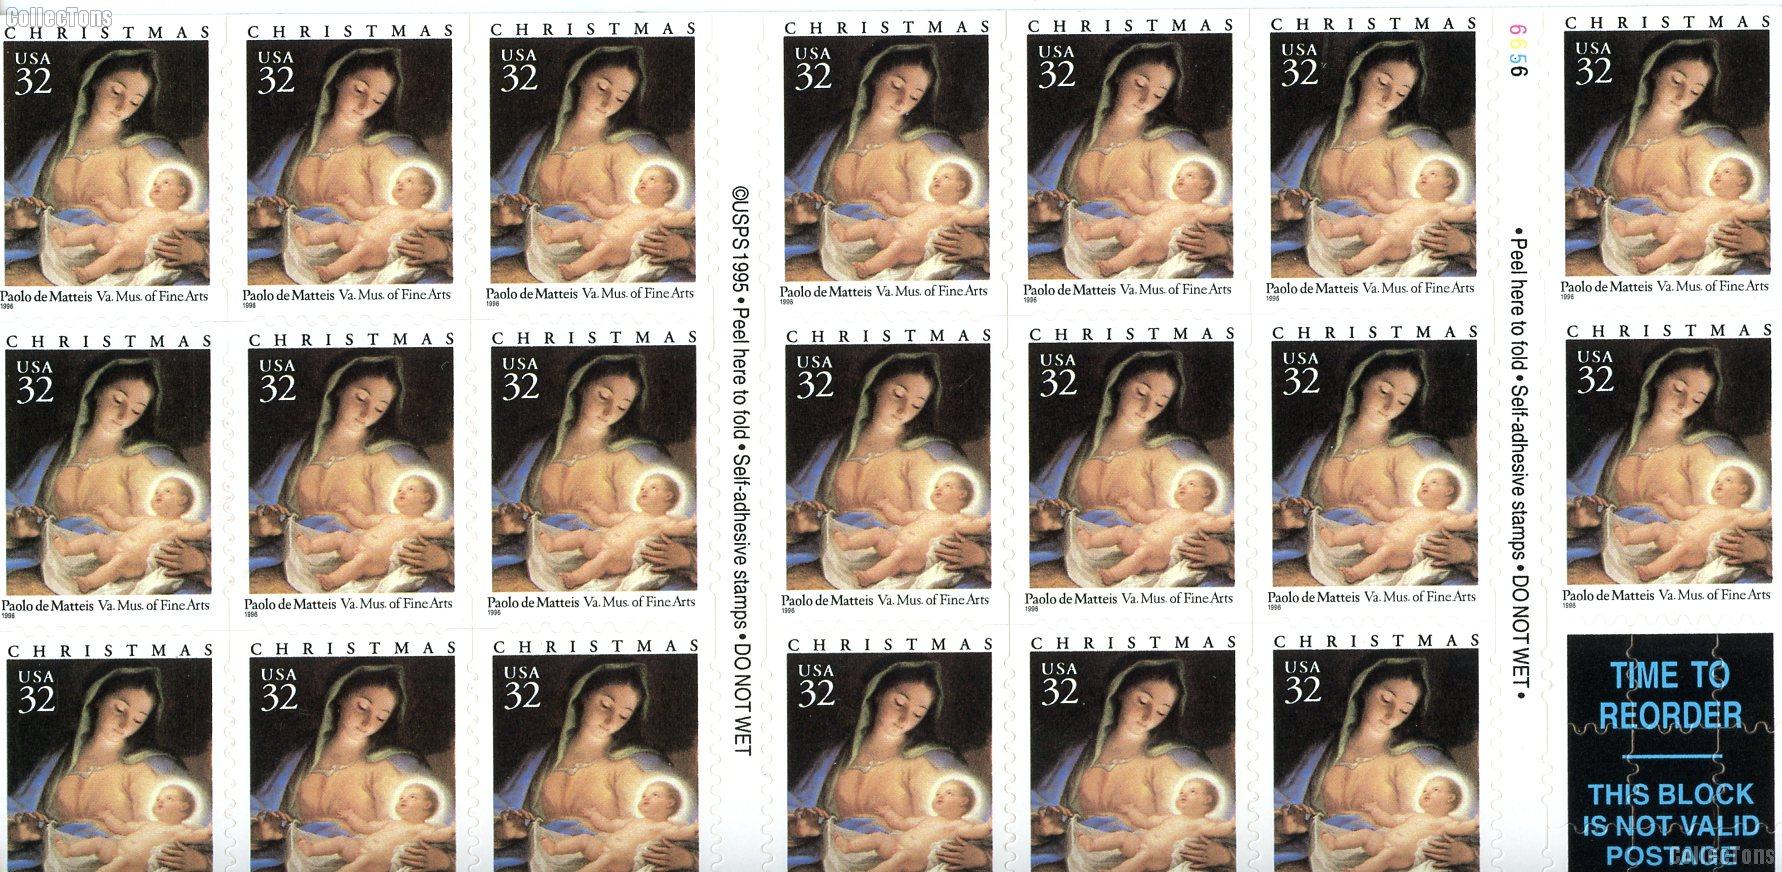 1996 Madonna & Child 32 Cent US Postage Stamp Unused Booklet of 20 Scott #3112A